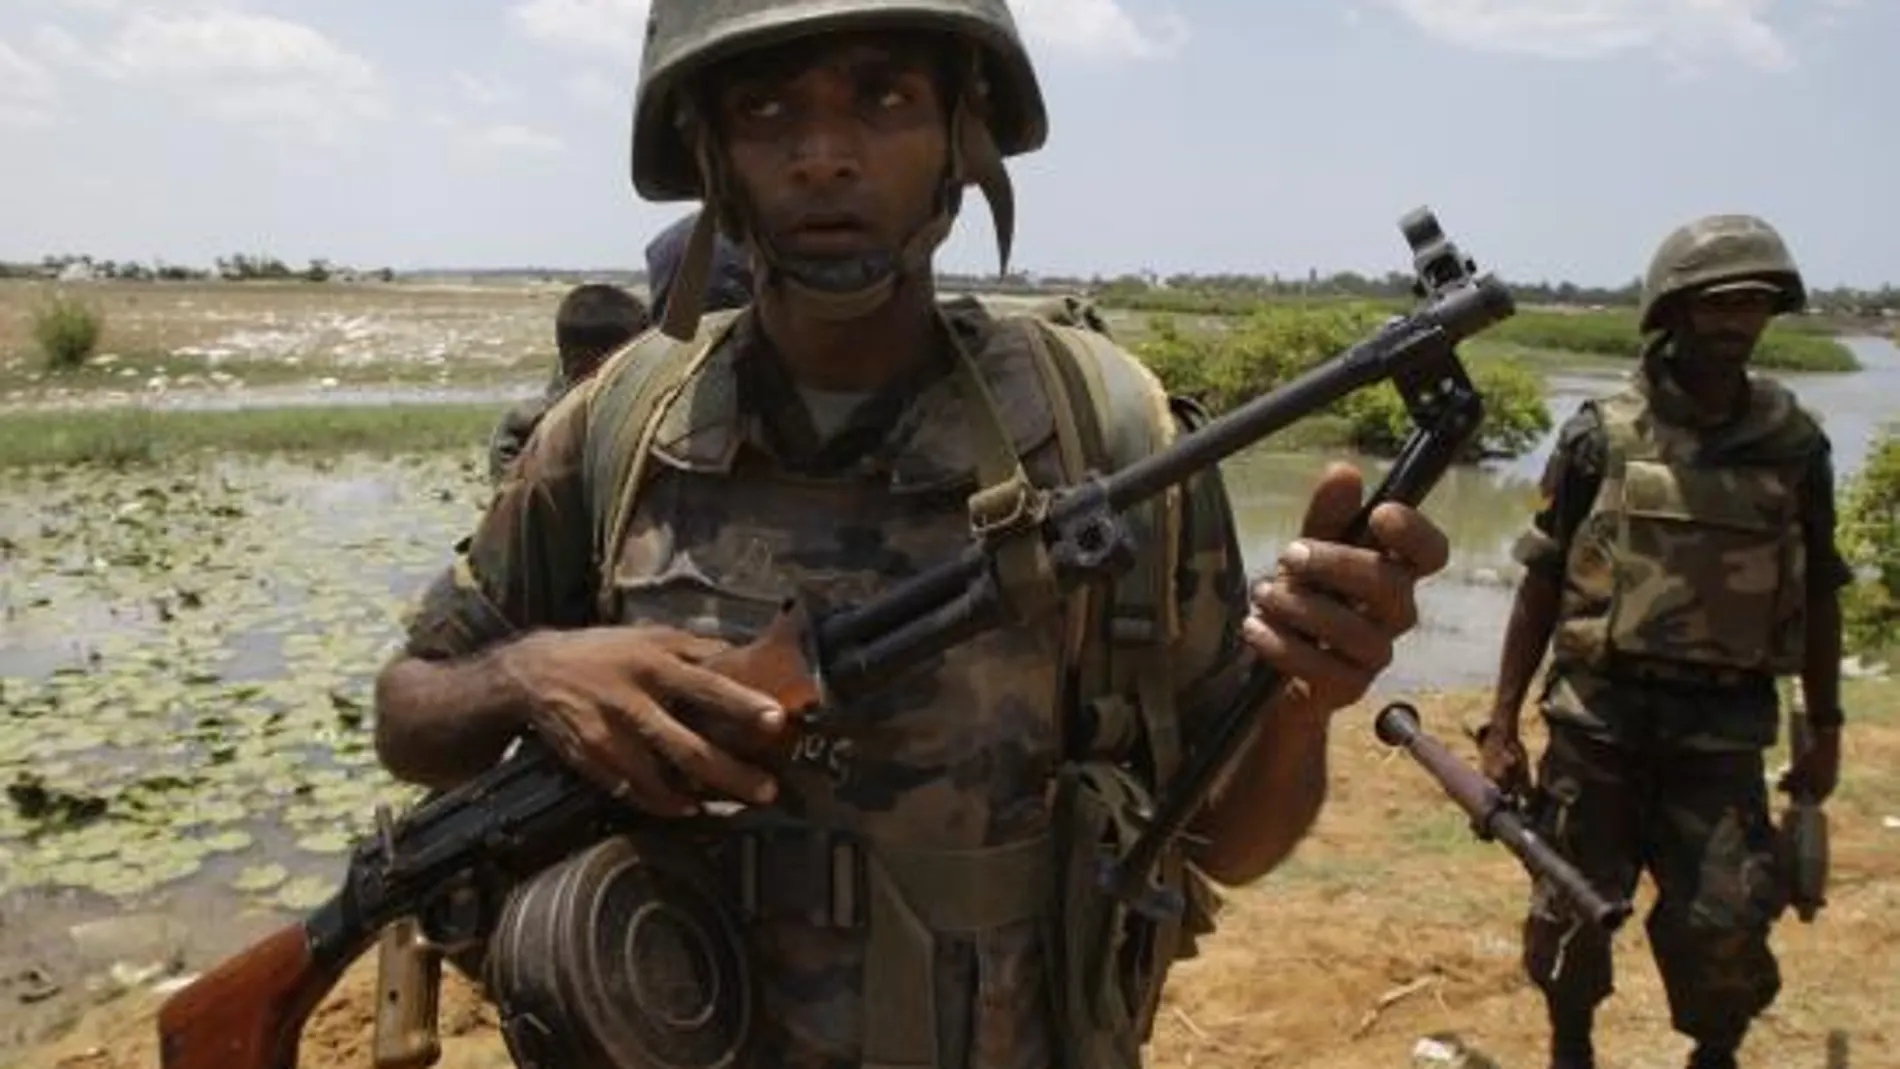 La guerrilla tamil anuncia un alto el fuego unilateral